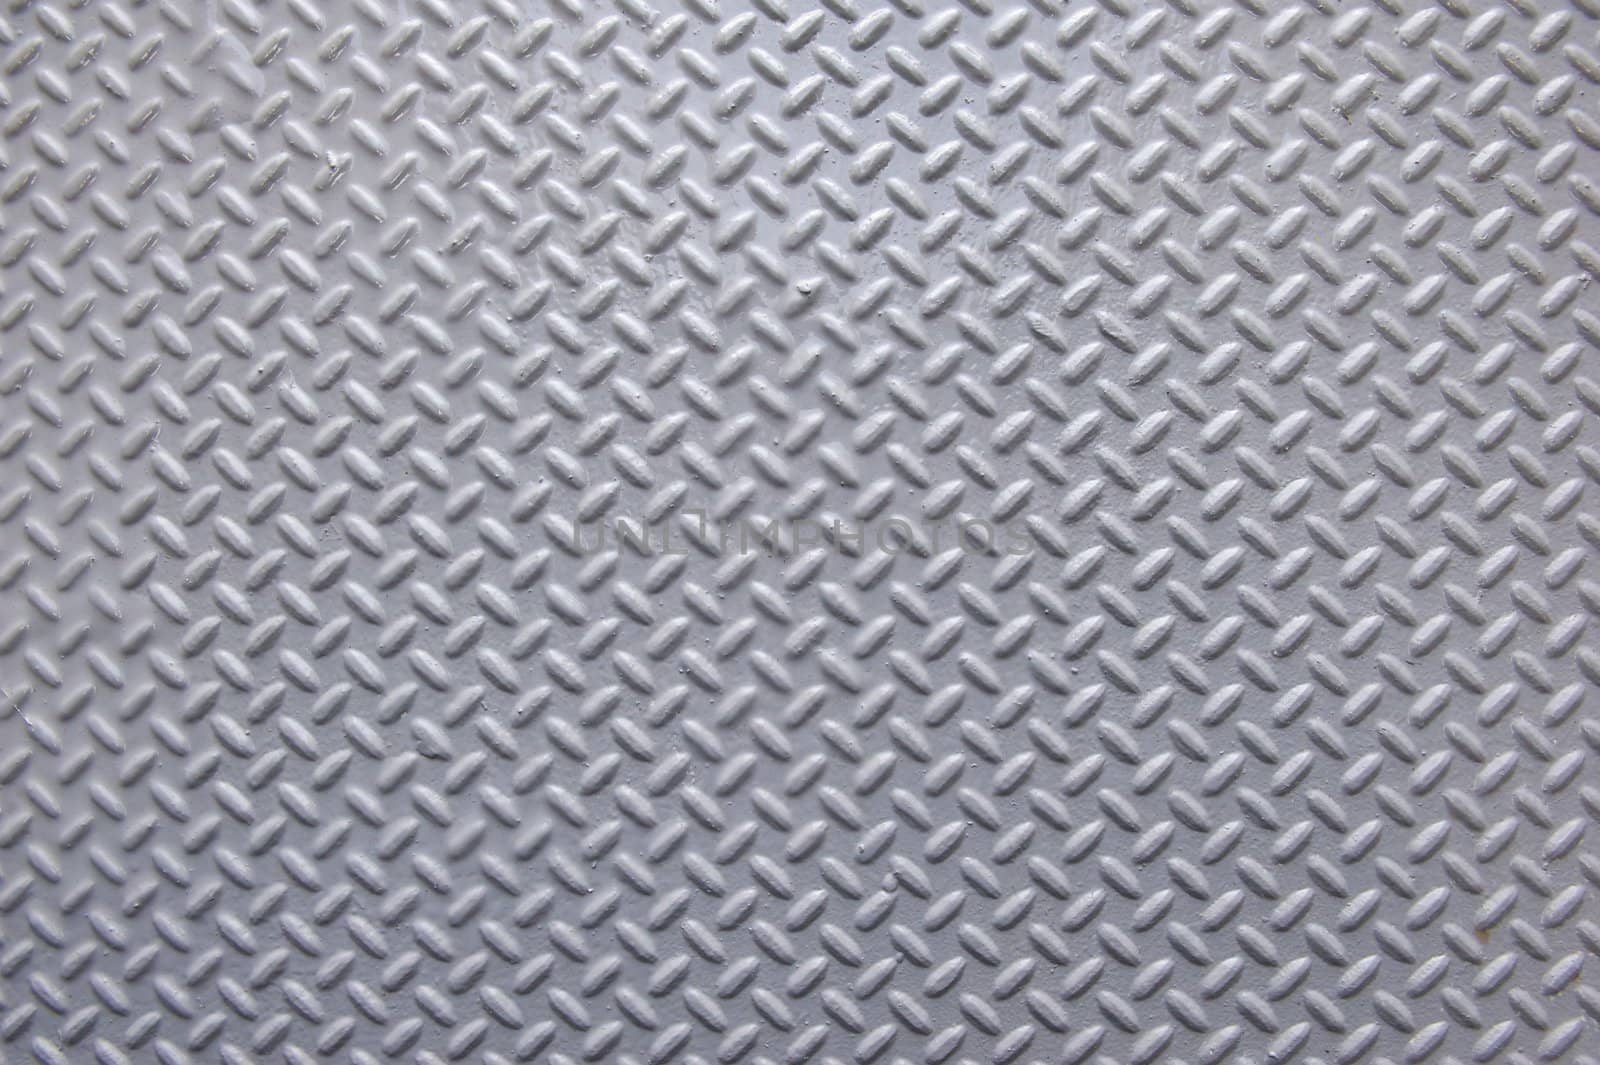 Painted Metal with Herringbone Pattern Background by pixelsnap